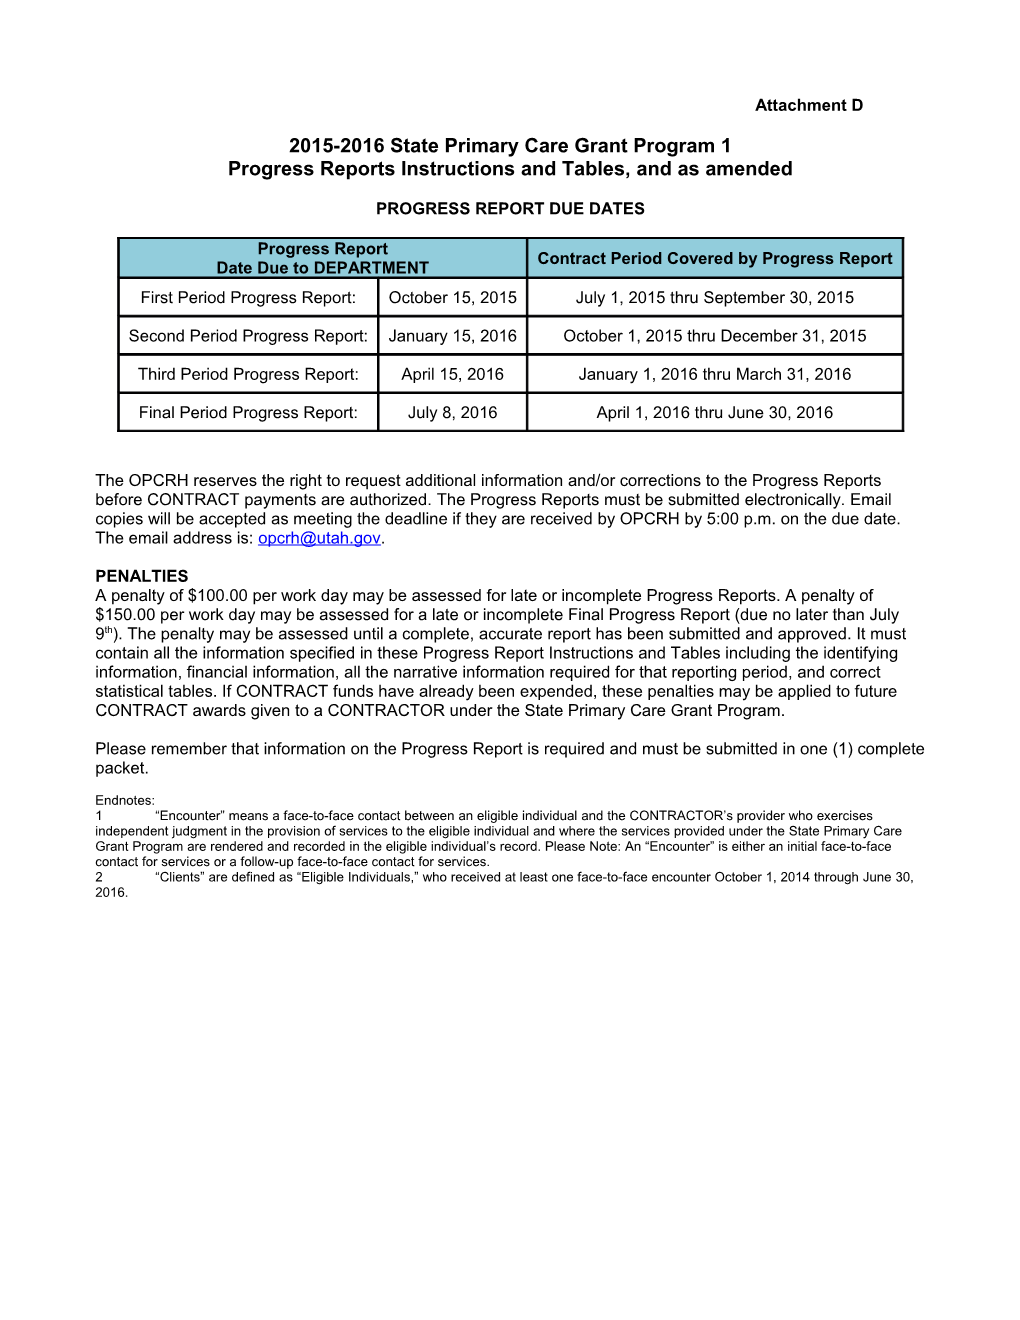 2015-2016 State Primary Care Grant Program 1